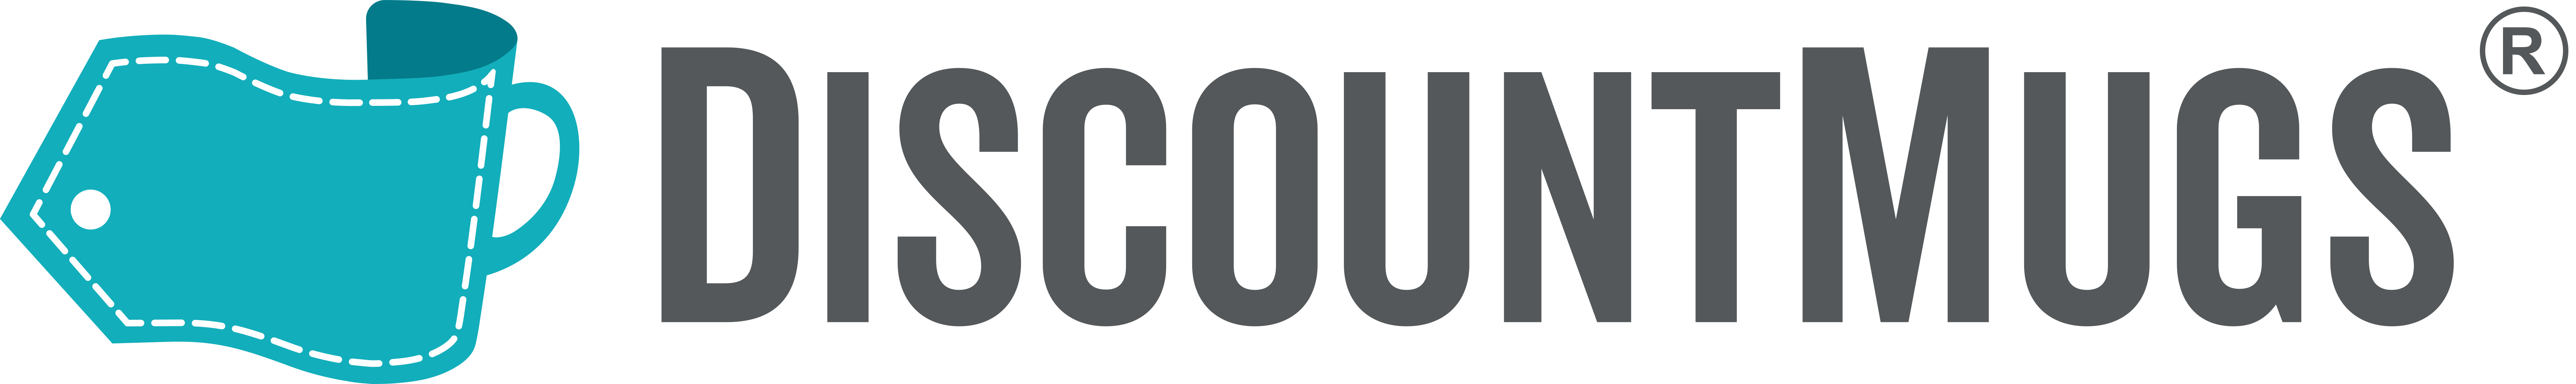 Discount Mugs logo